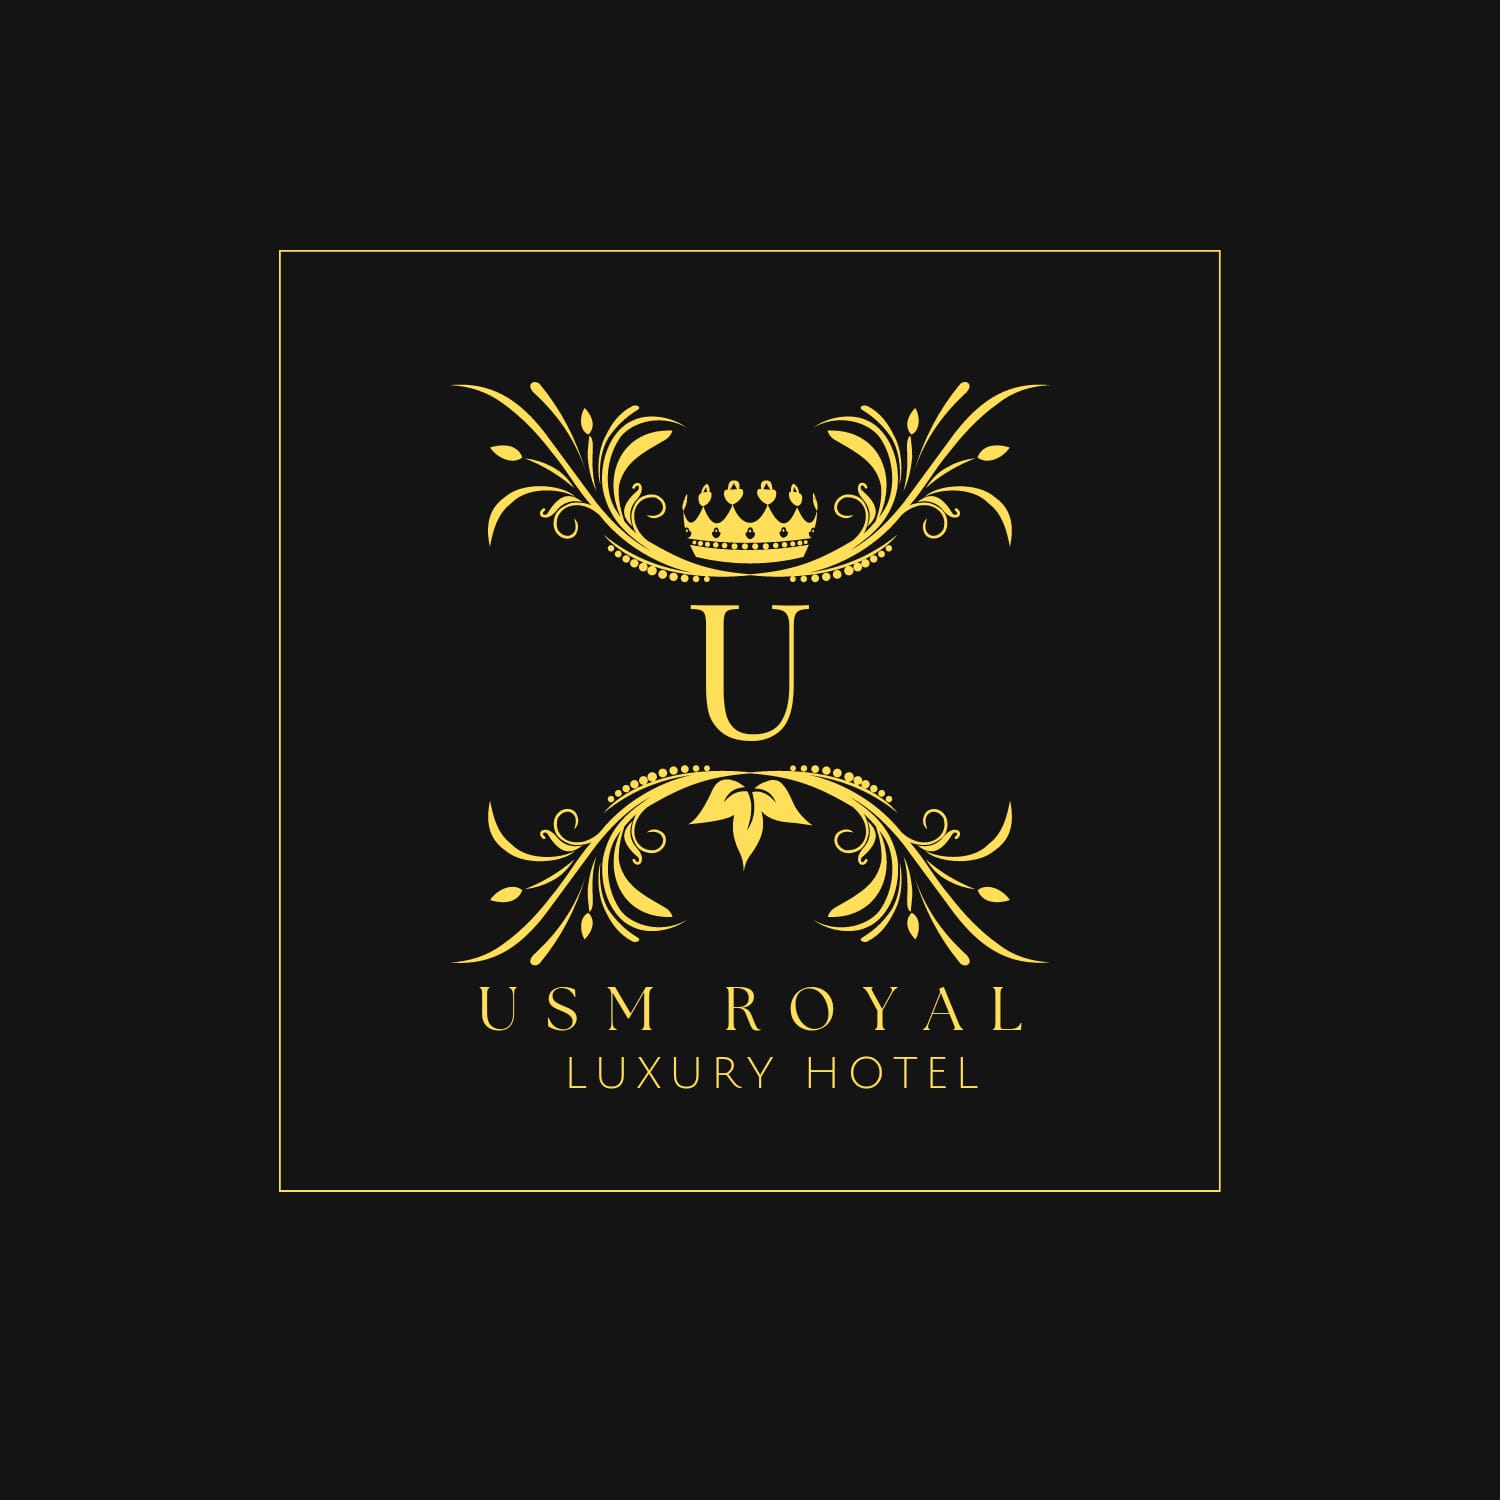 The logo for usm royal luxury hotel.